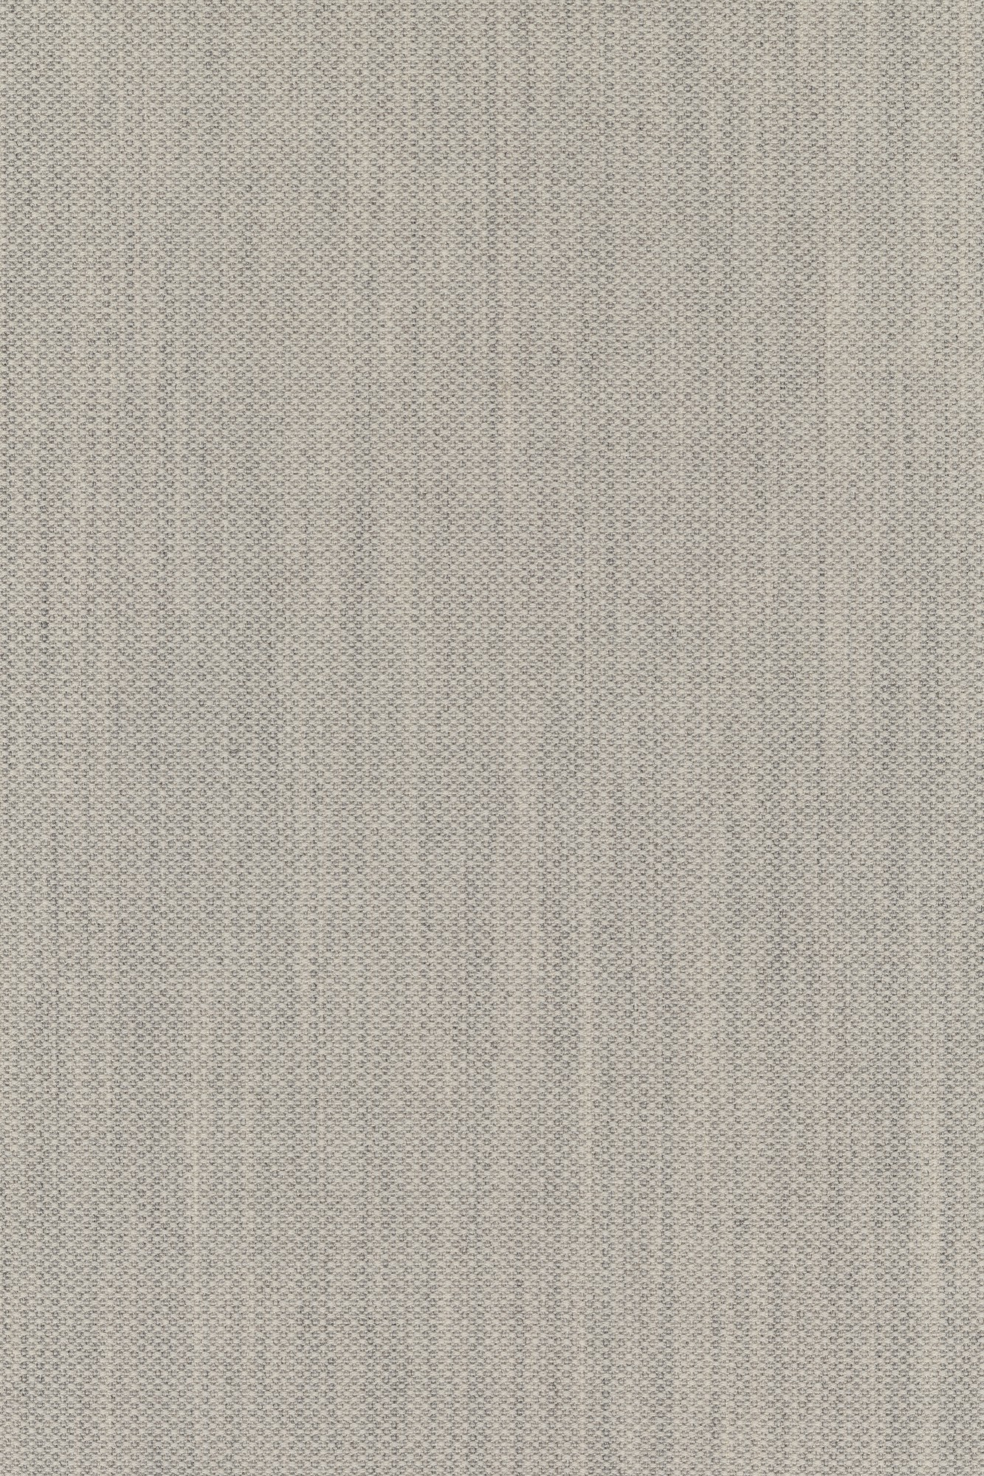 Fabric sample Fiord 101 grey